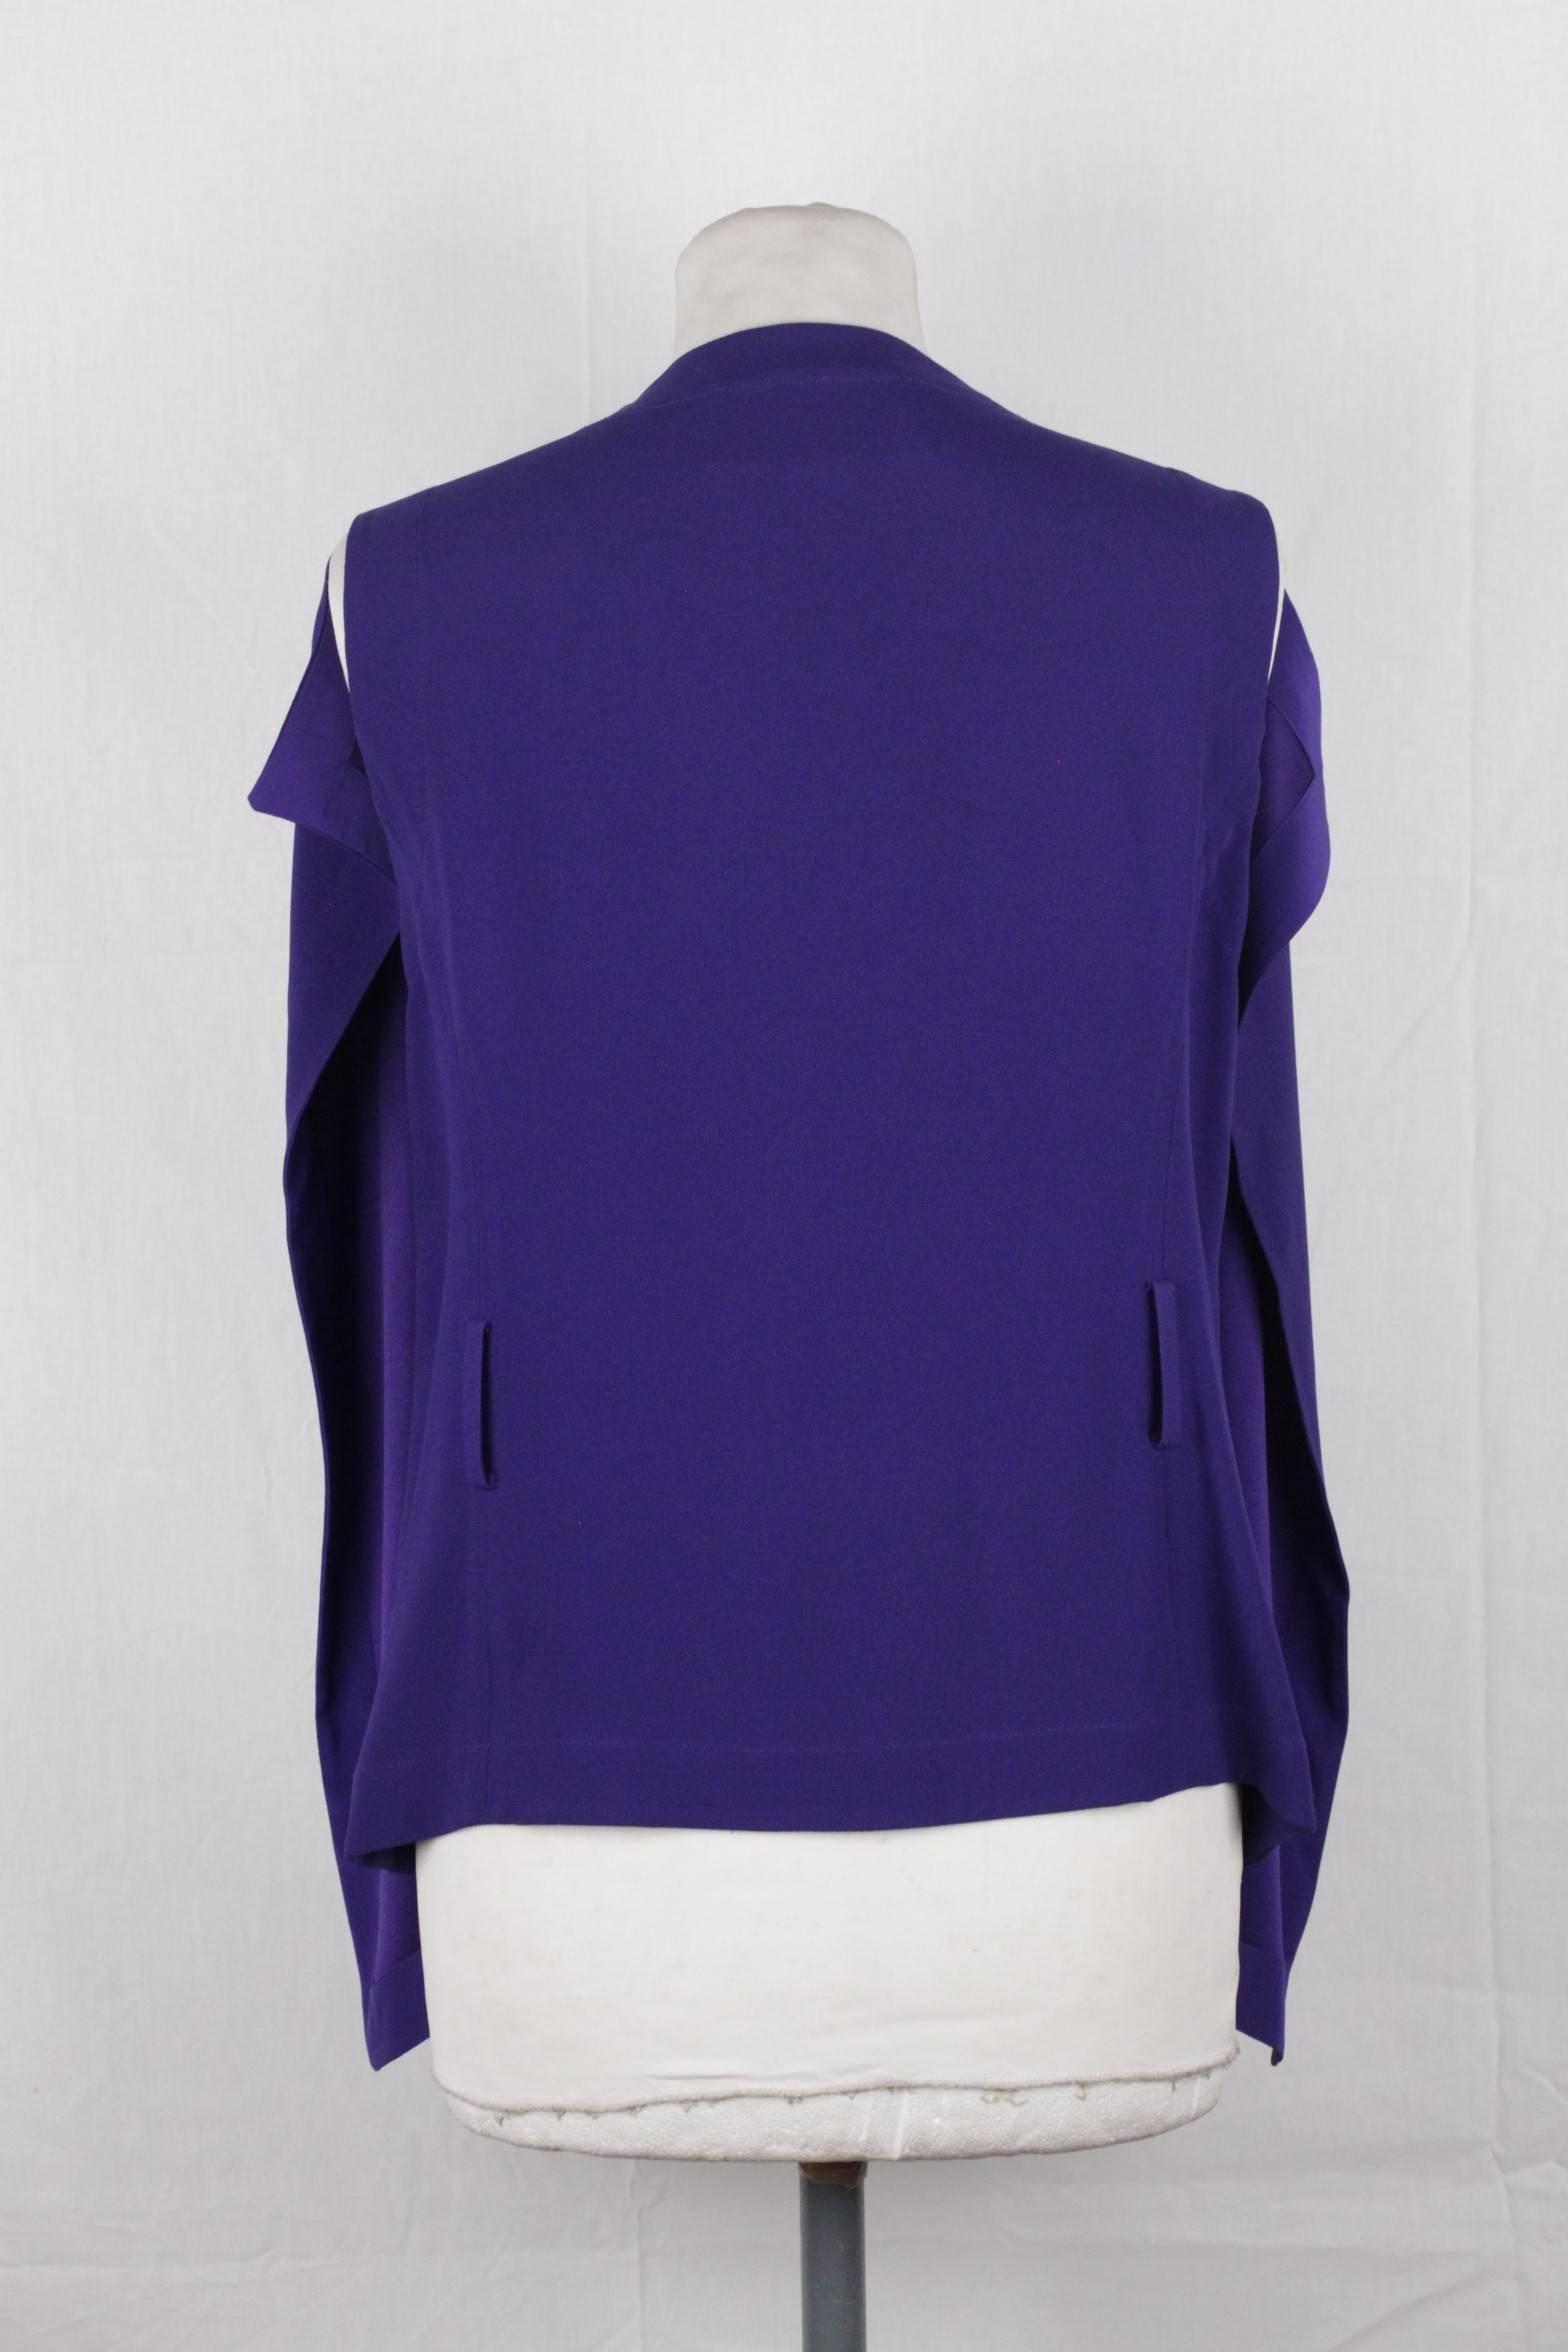 VIONNET Purple Silky Fabric SLEEVELESS BLOUSE Size 40 3